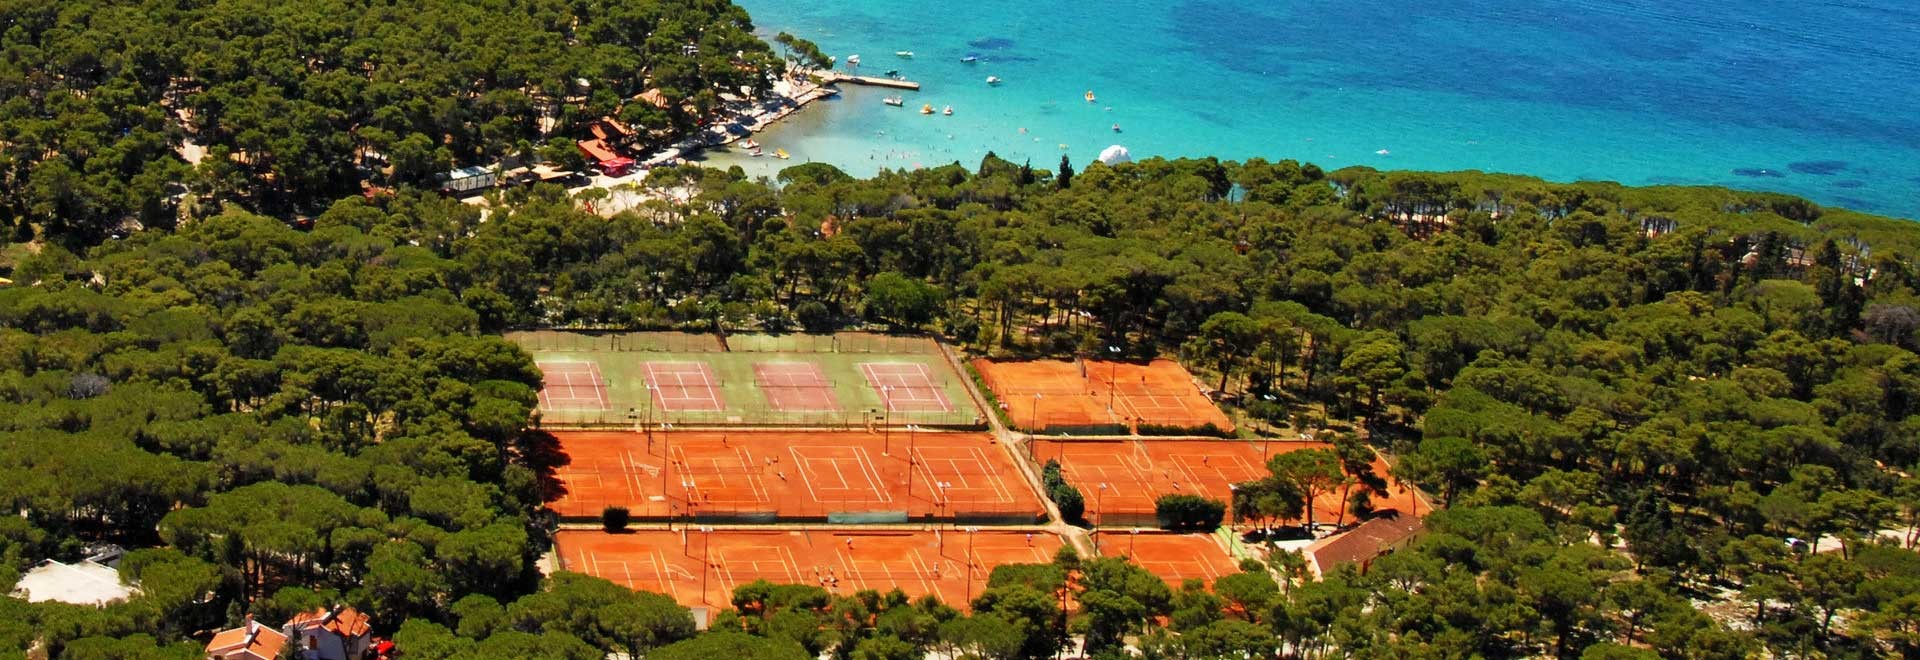 Ilirija Tennis Academy, Croatia - Book. Travel. Play.